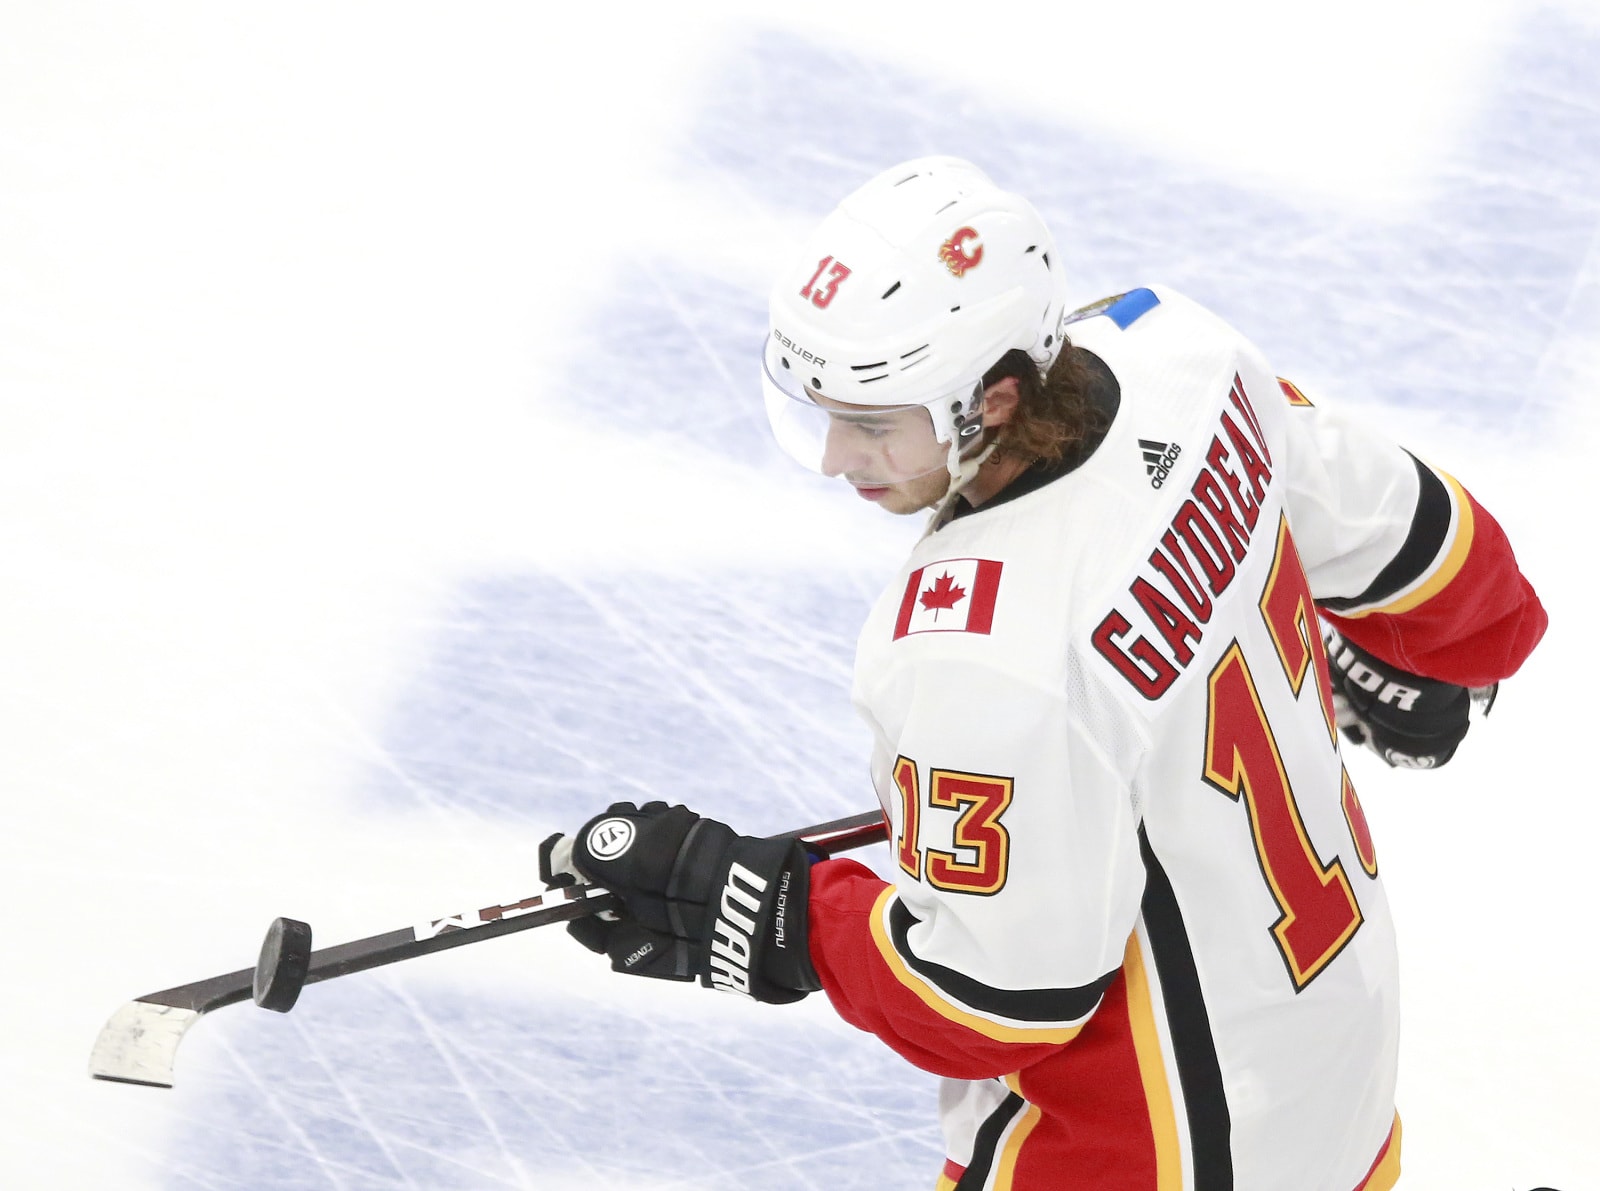 Calgary Flames star forward Johnny Gaudreau coming to Columbus